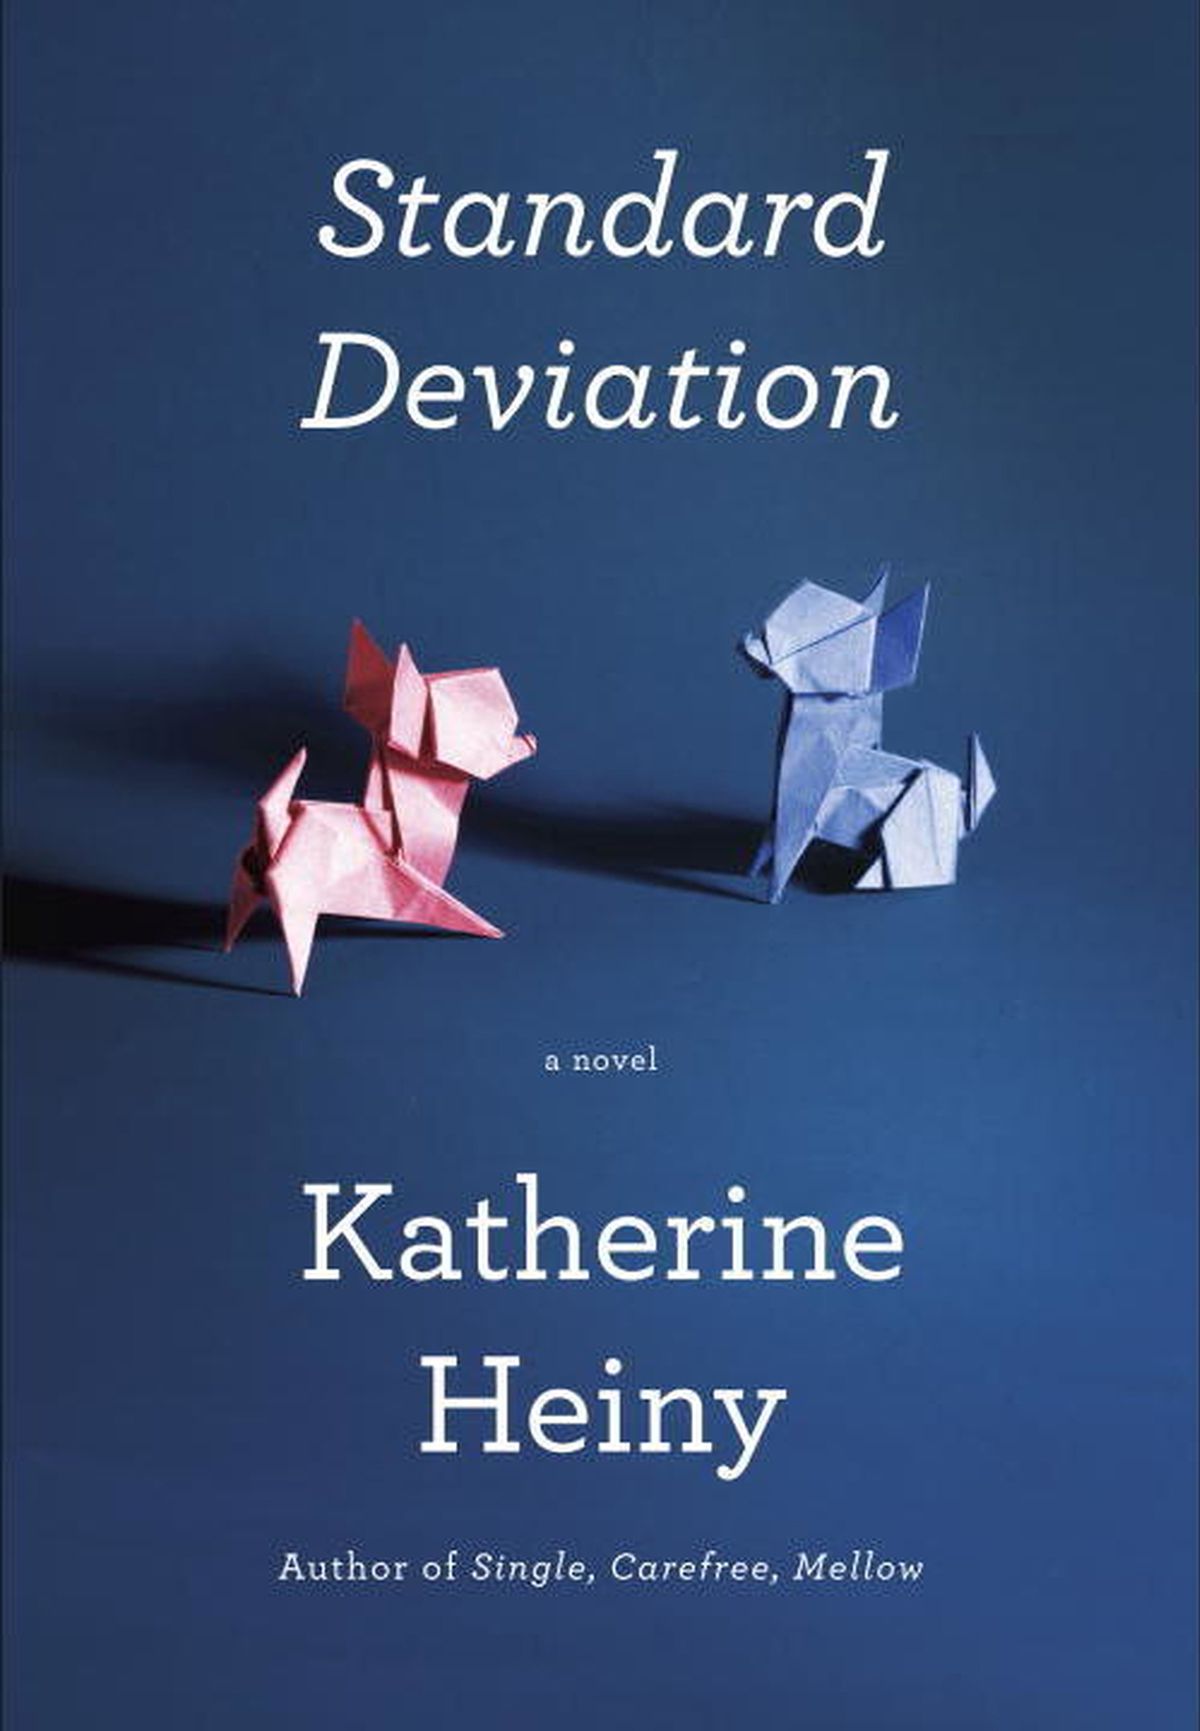 Standard Deviation by Katherine Heiny